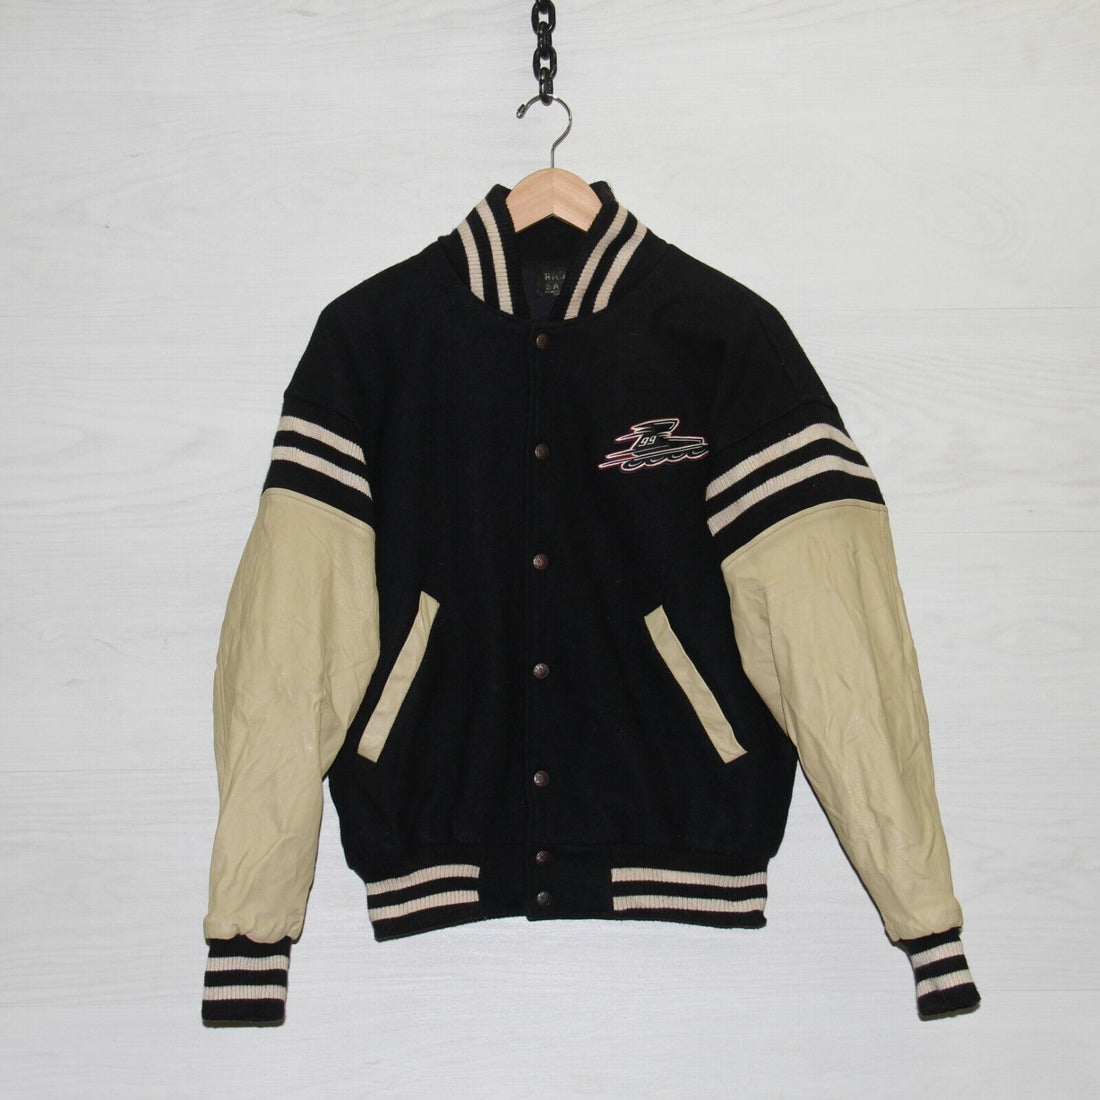 Vintage Wayne Gretzky Roller Hockey Leather Wool Varsity Jacket Size Medium NHL